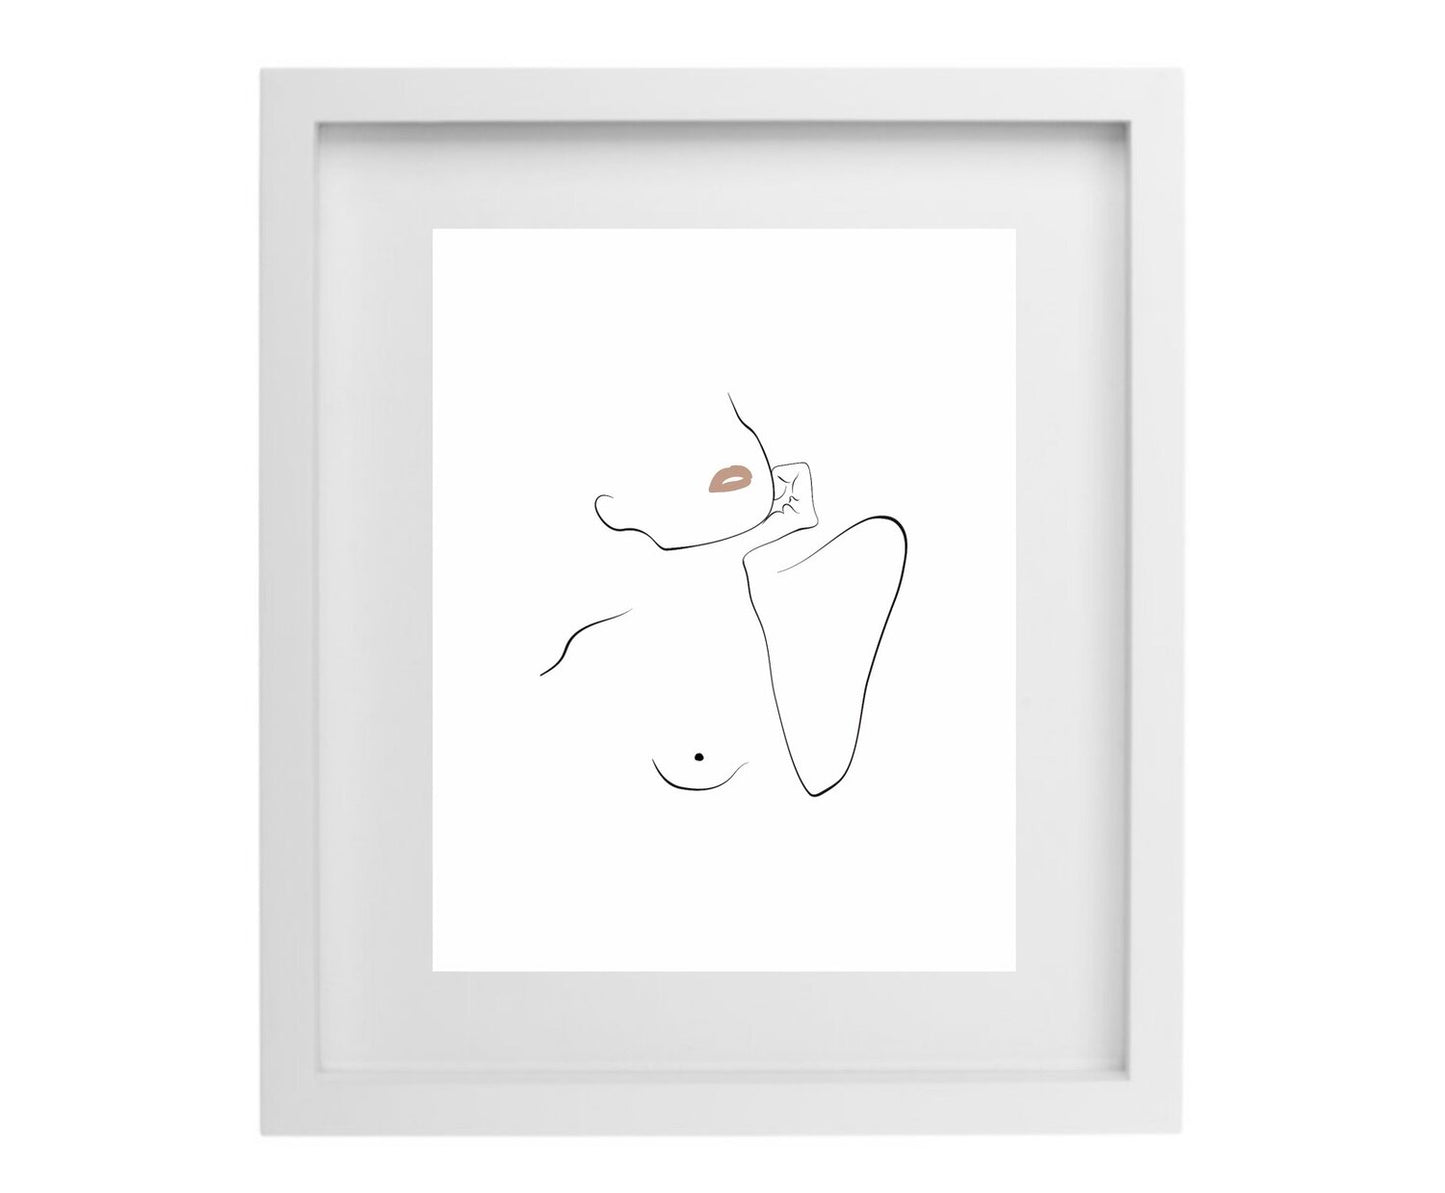 Minimalist female figure line artwork in a white frame